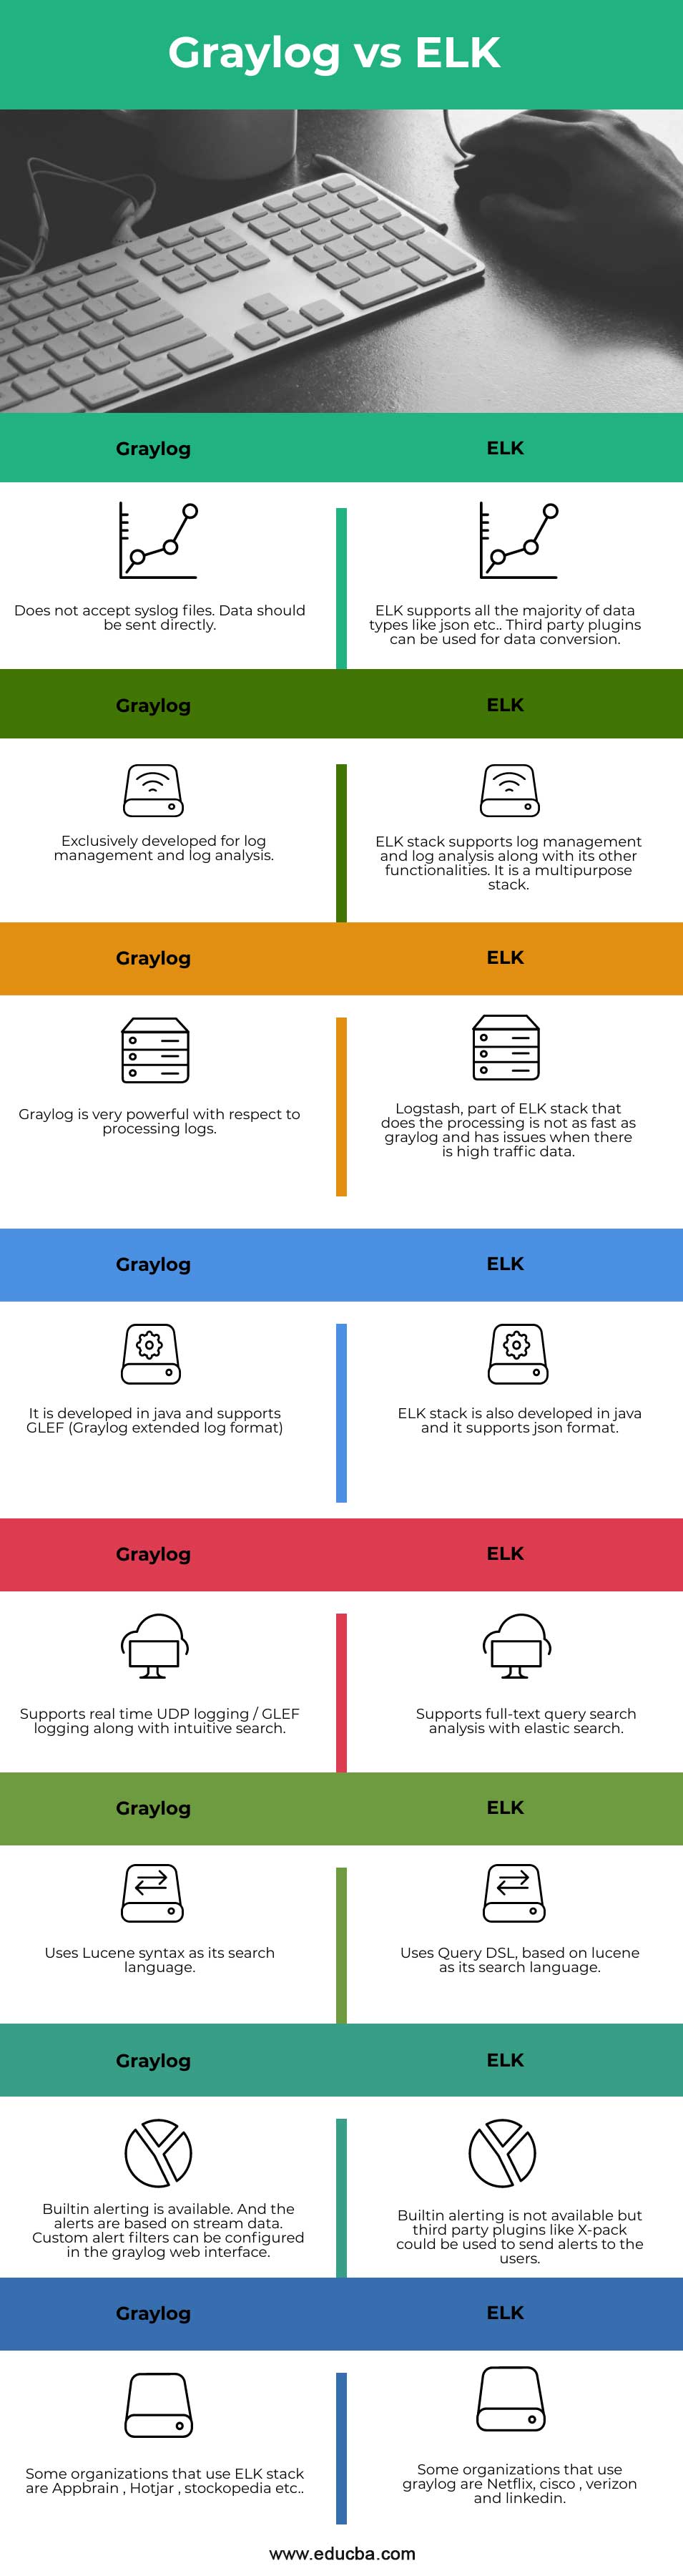 Graylog-vs-ELK-info